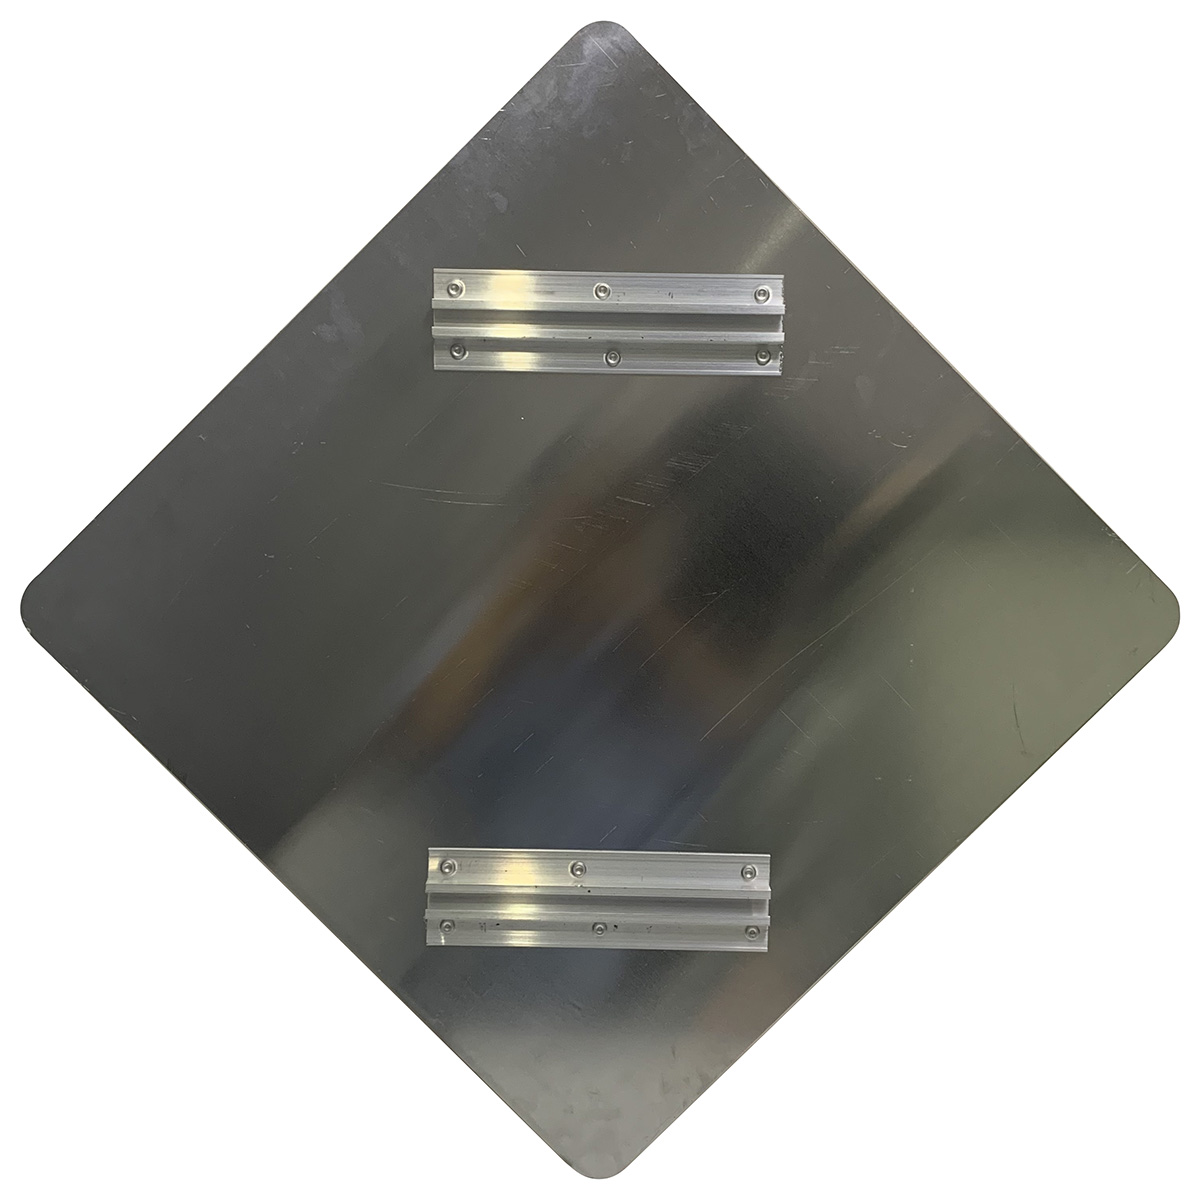 Placa de aluminio reflectante de precaución de tráfico de acera de 60 * 60 cm